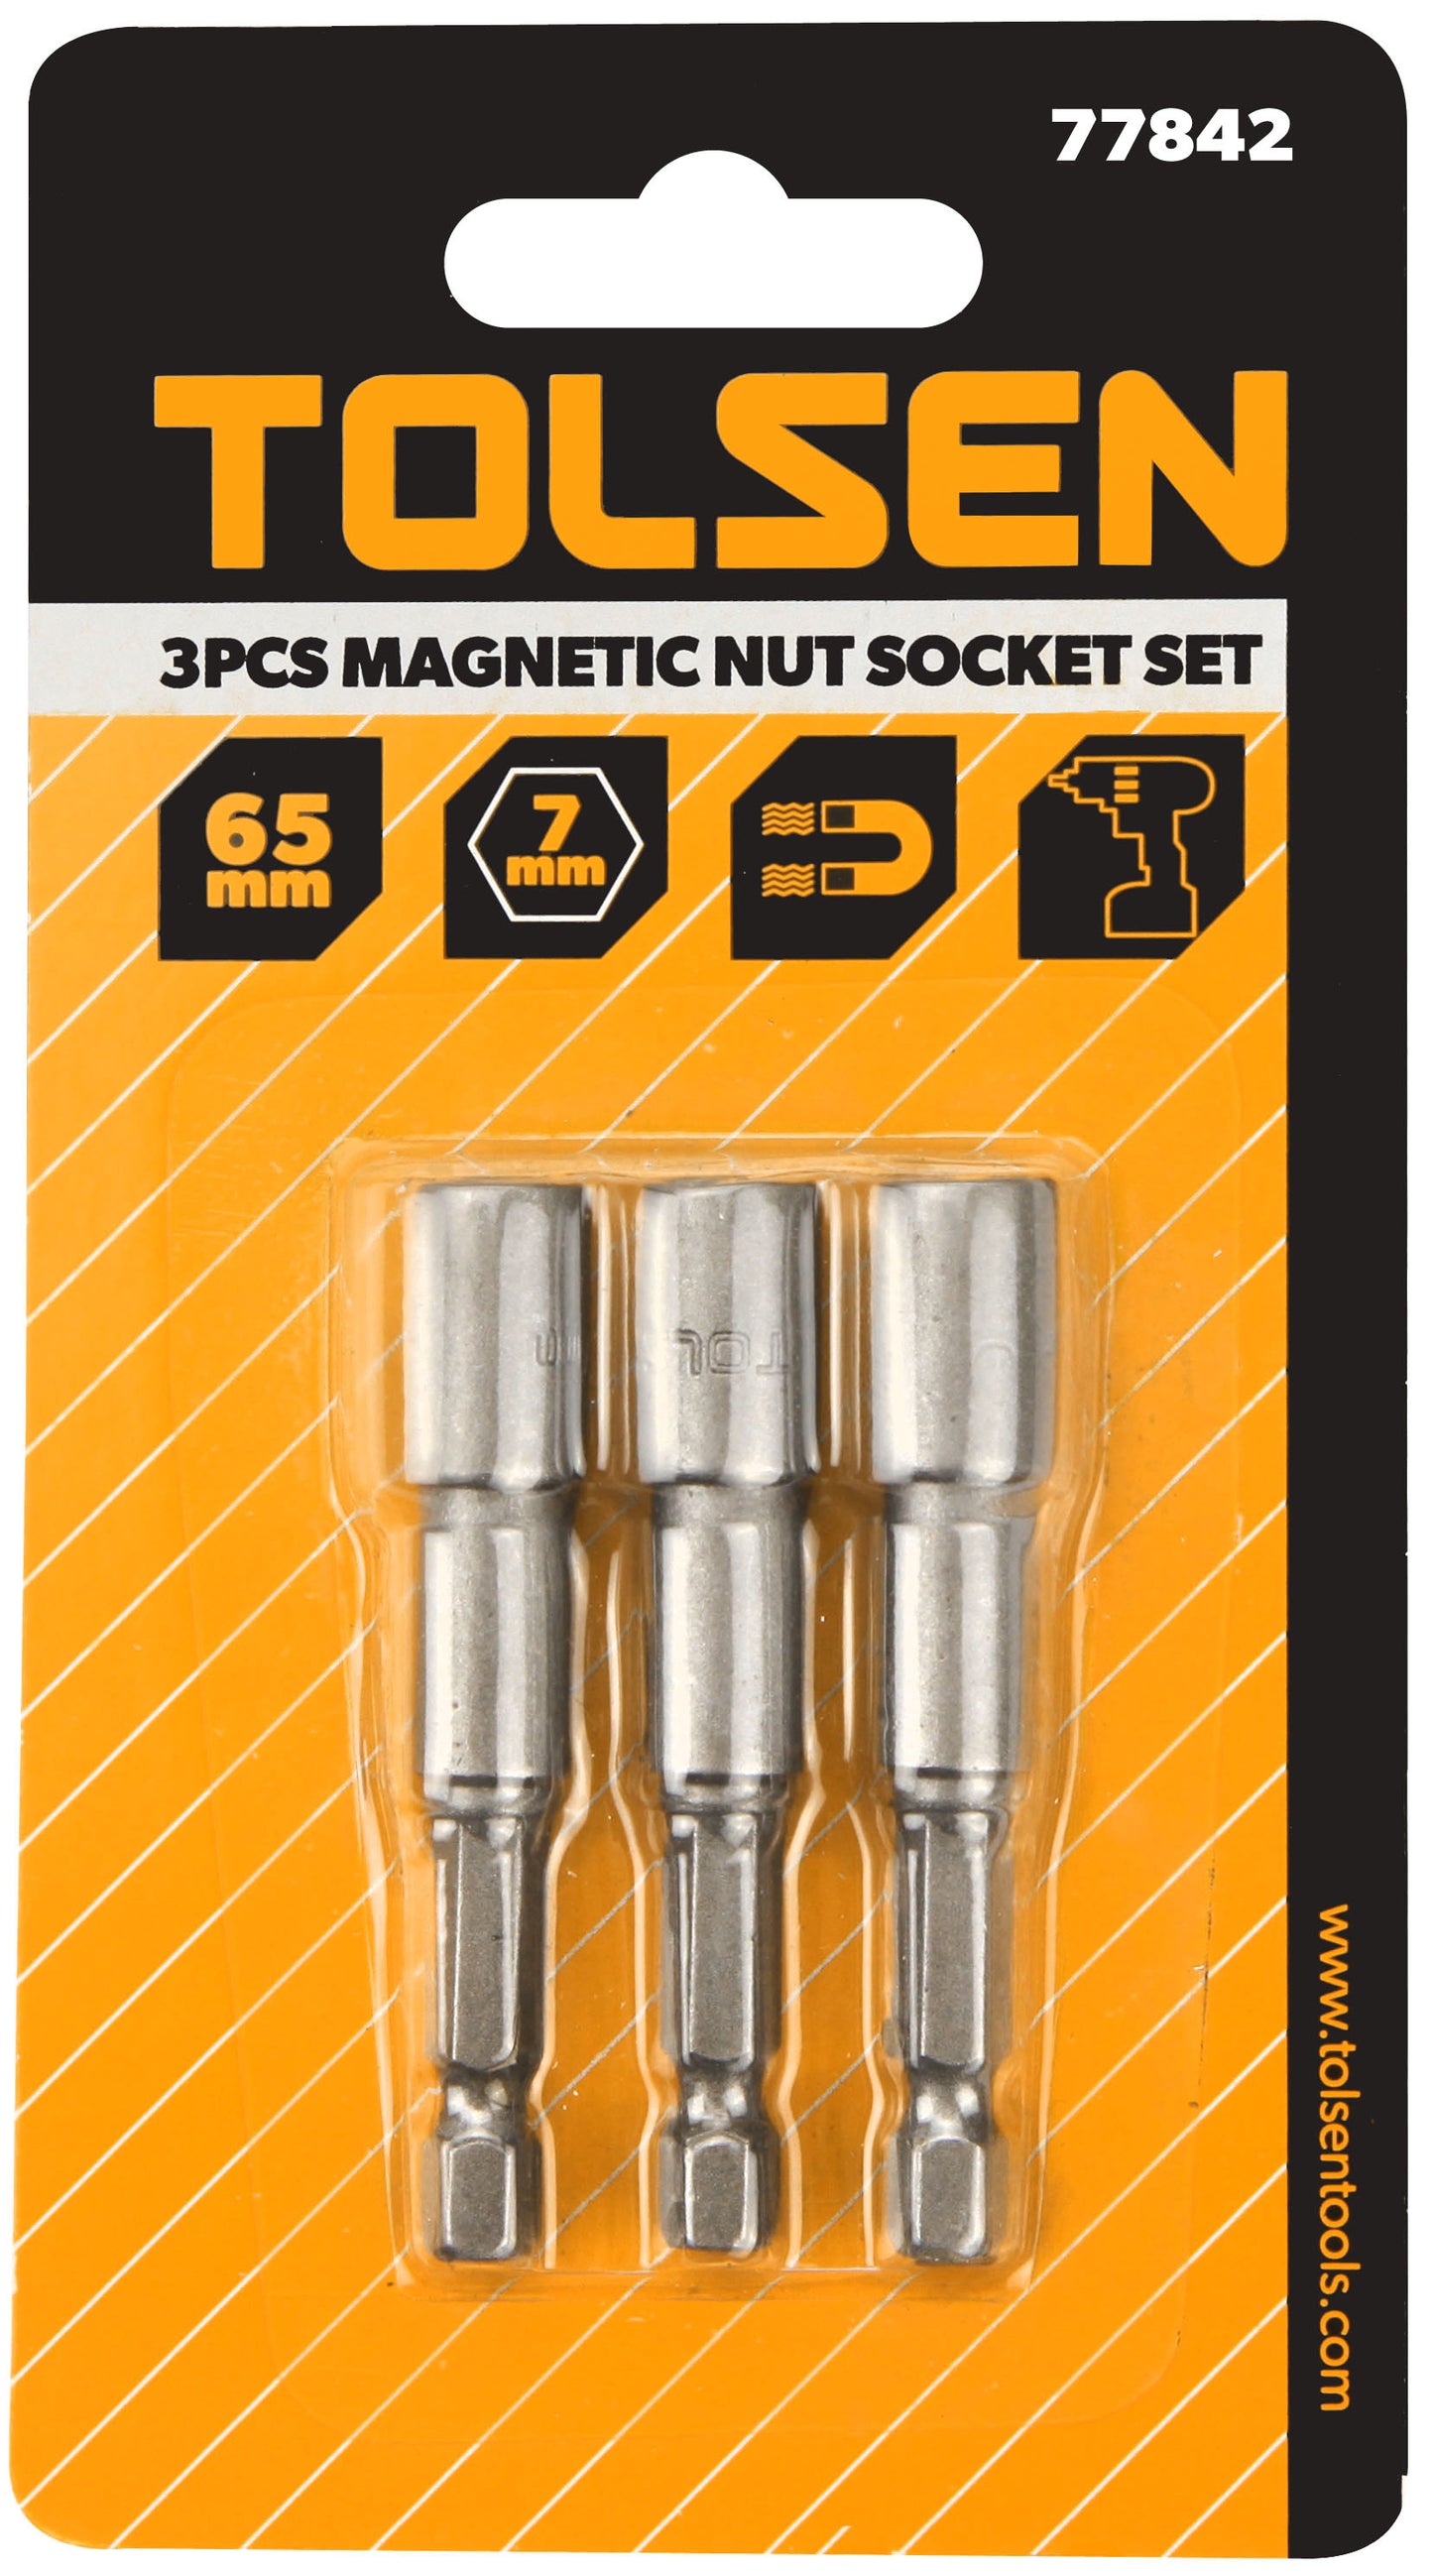 3PCS MAGNETIC NUT SOCKET SET (8mm)